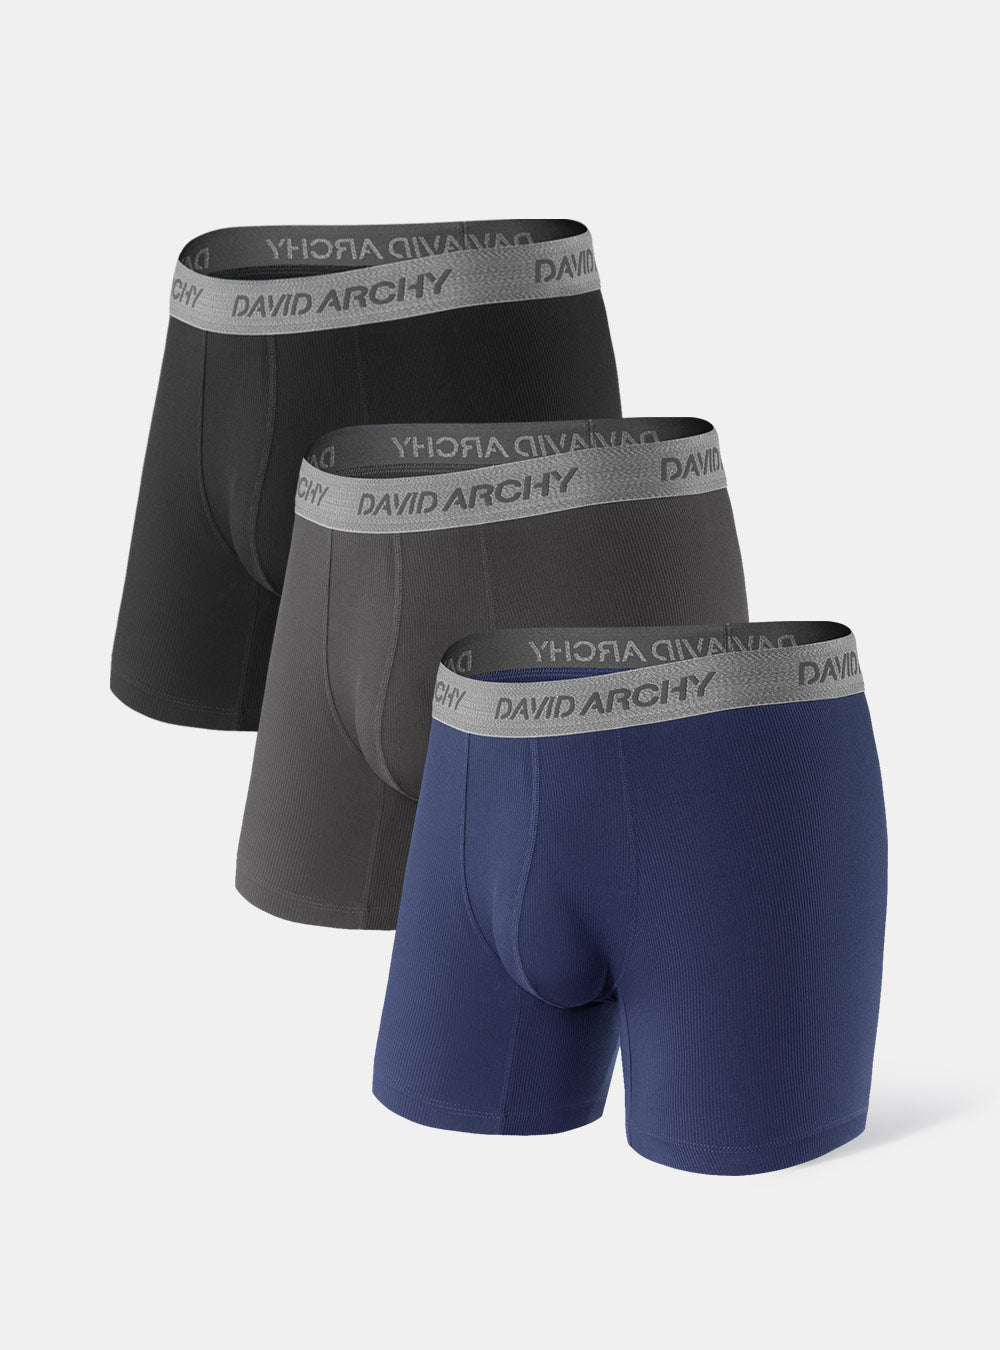 David Archy 4 Packs Briefs Separate Pouch Modal Breathable Long Boxer Briefs  S M L XL